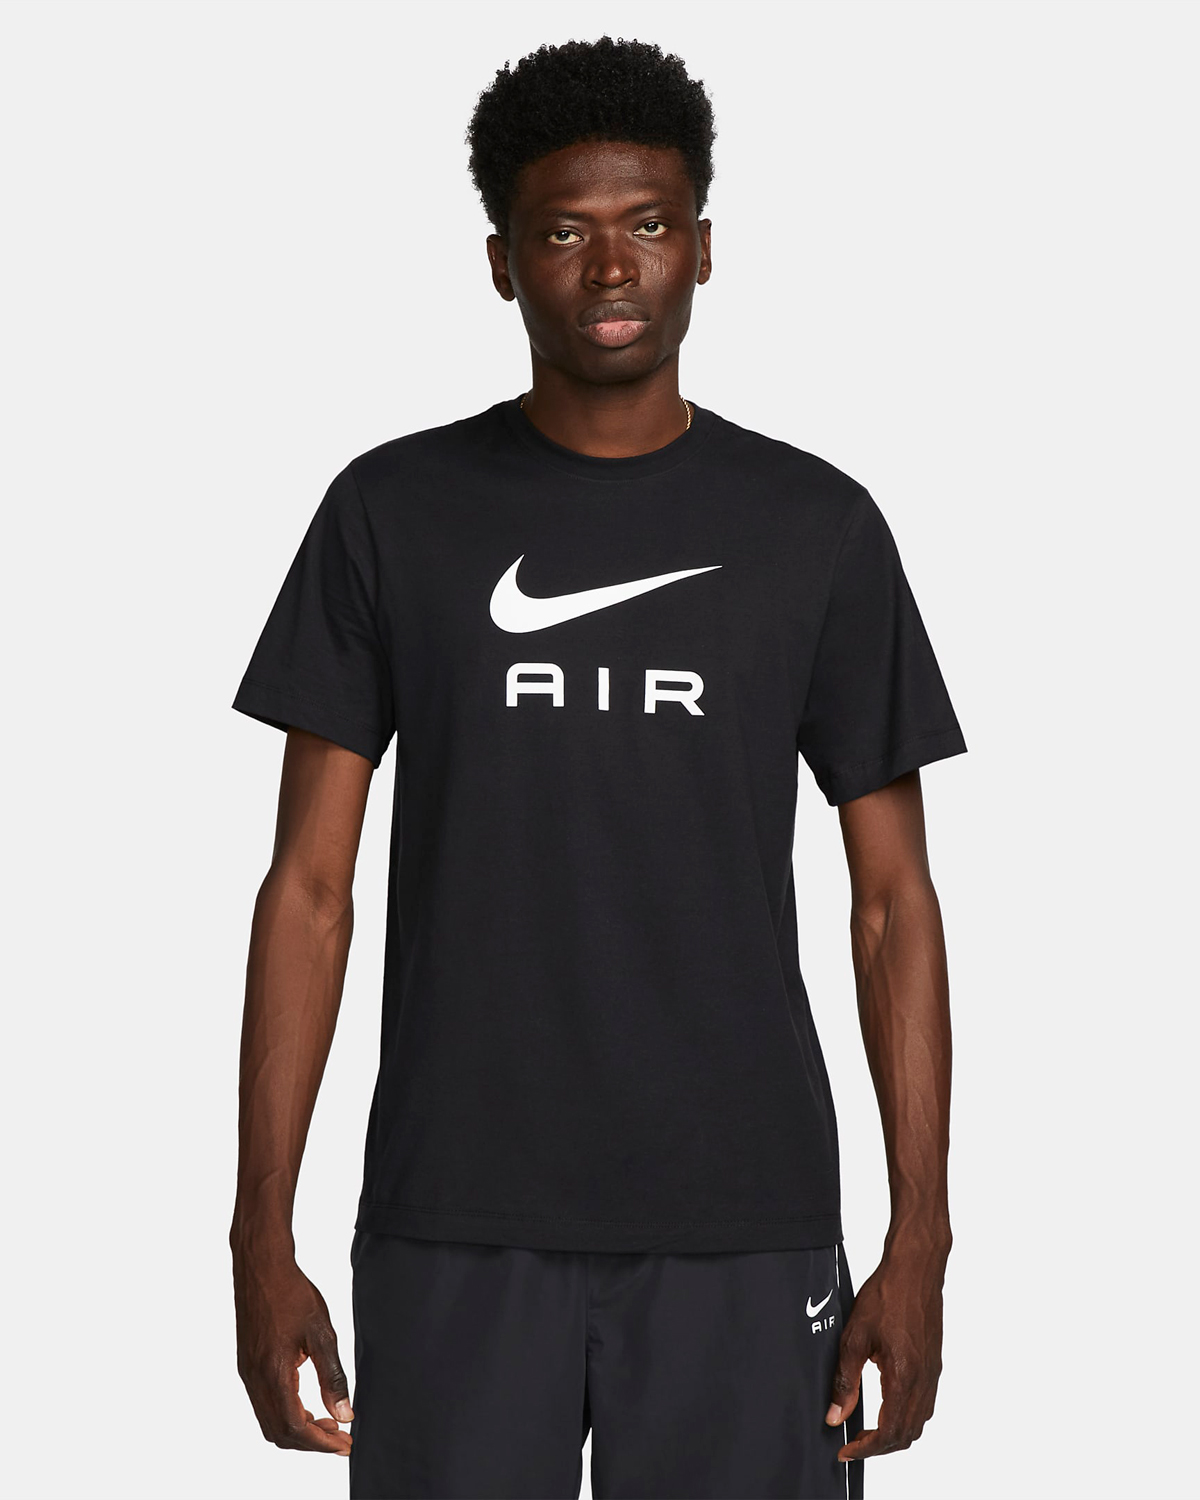 Nike-Air-T-Shirt-Black-White